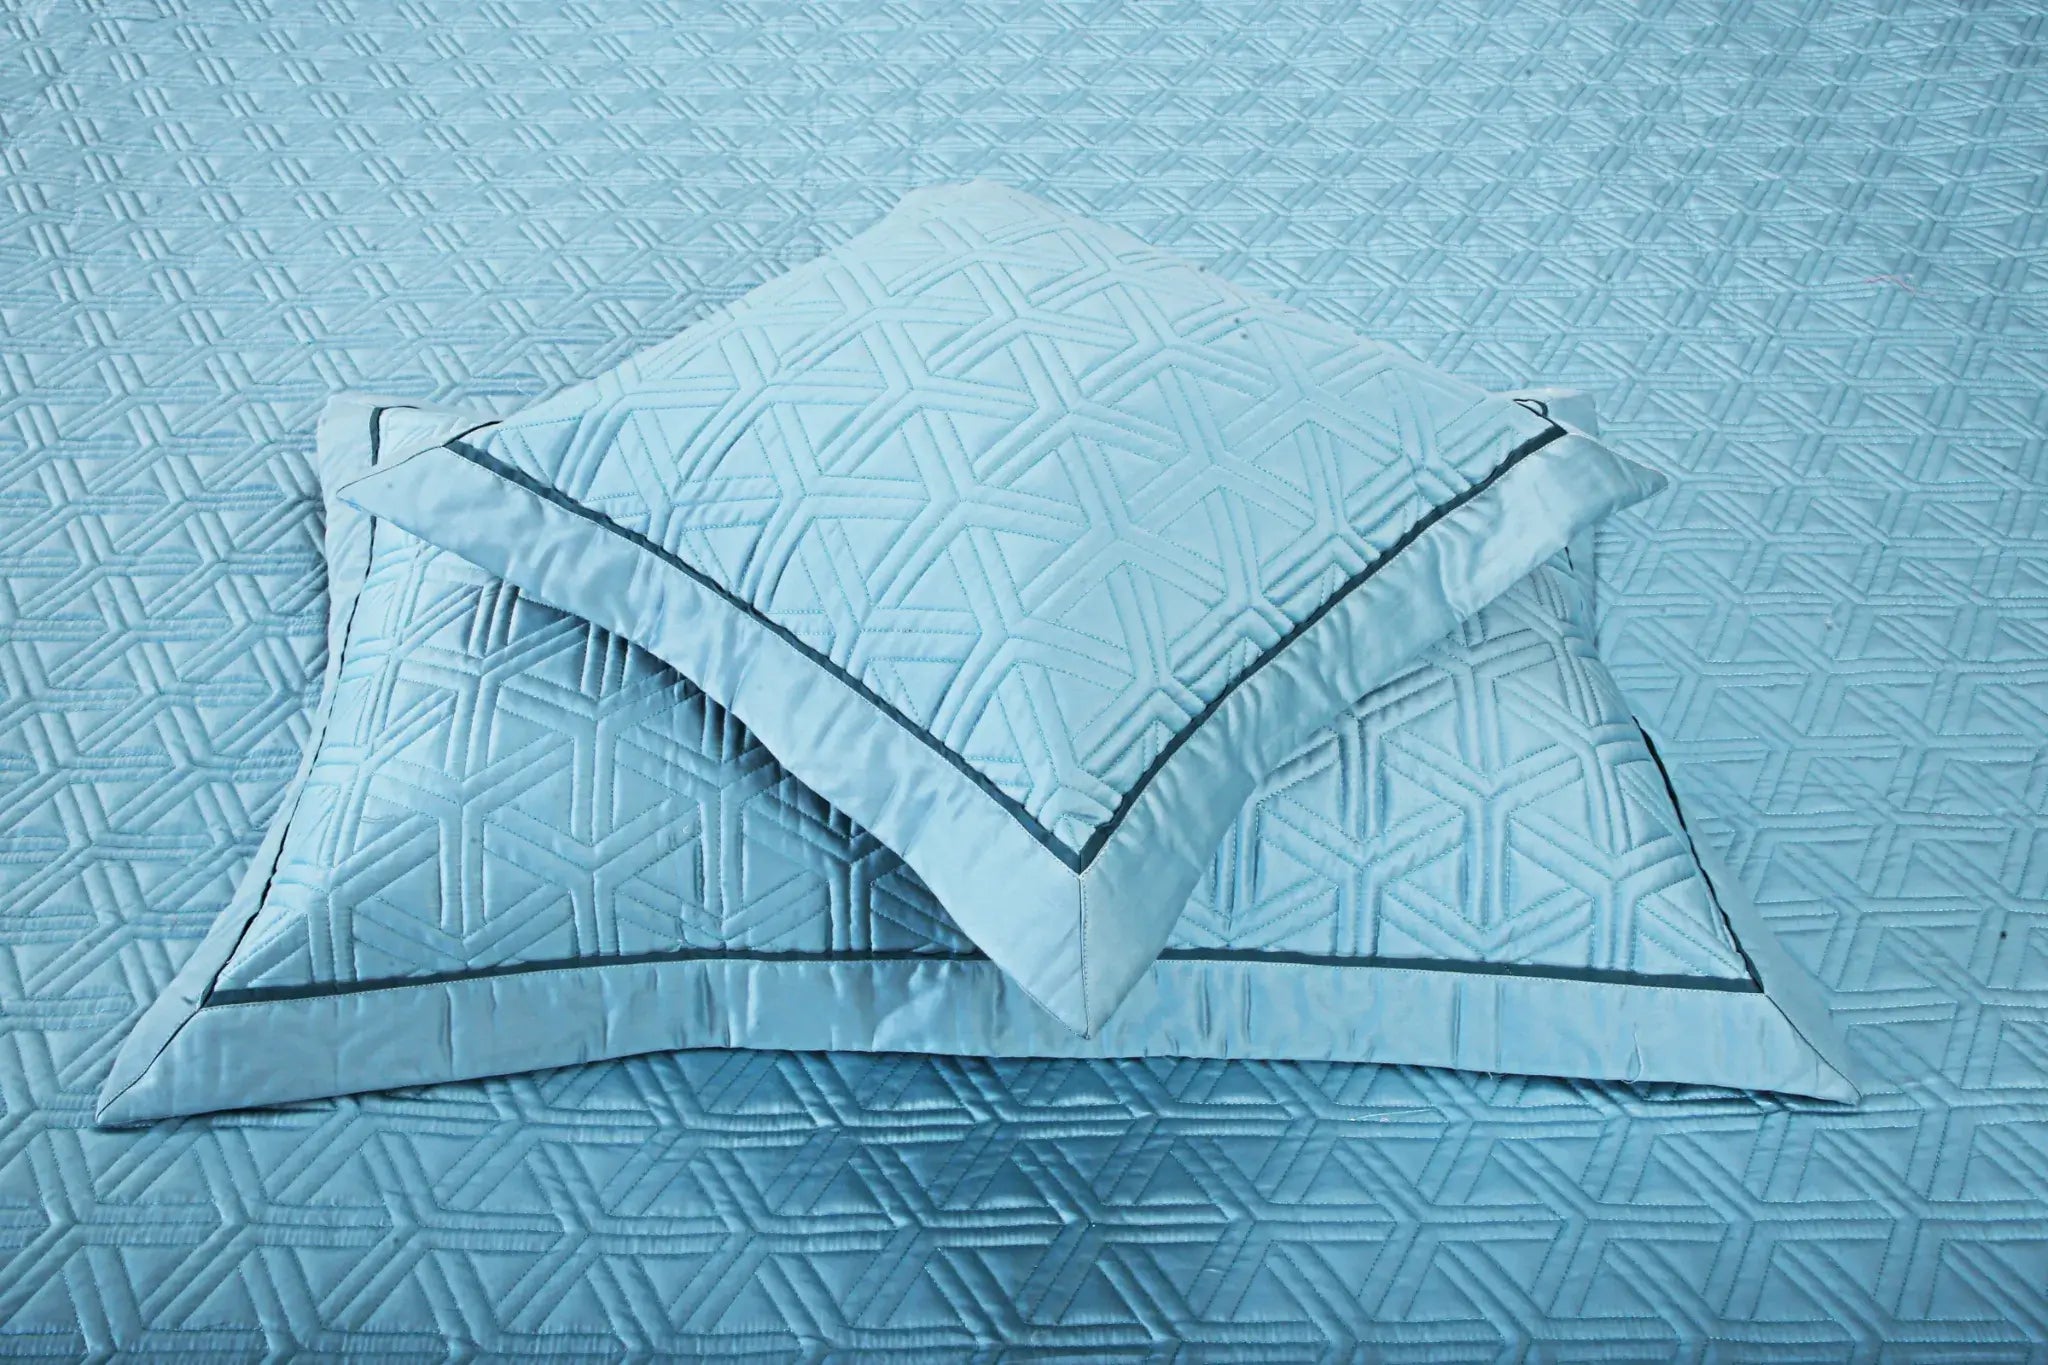 Malako Kairo 500 TC Maya Blue Solid King Size 100% Cotton Quilted Bed Cover Set - MALAKO